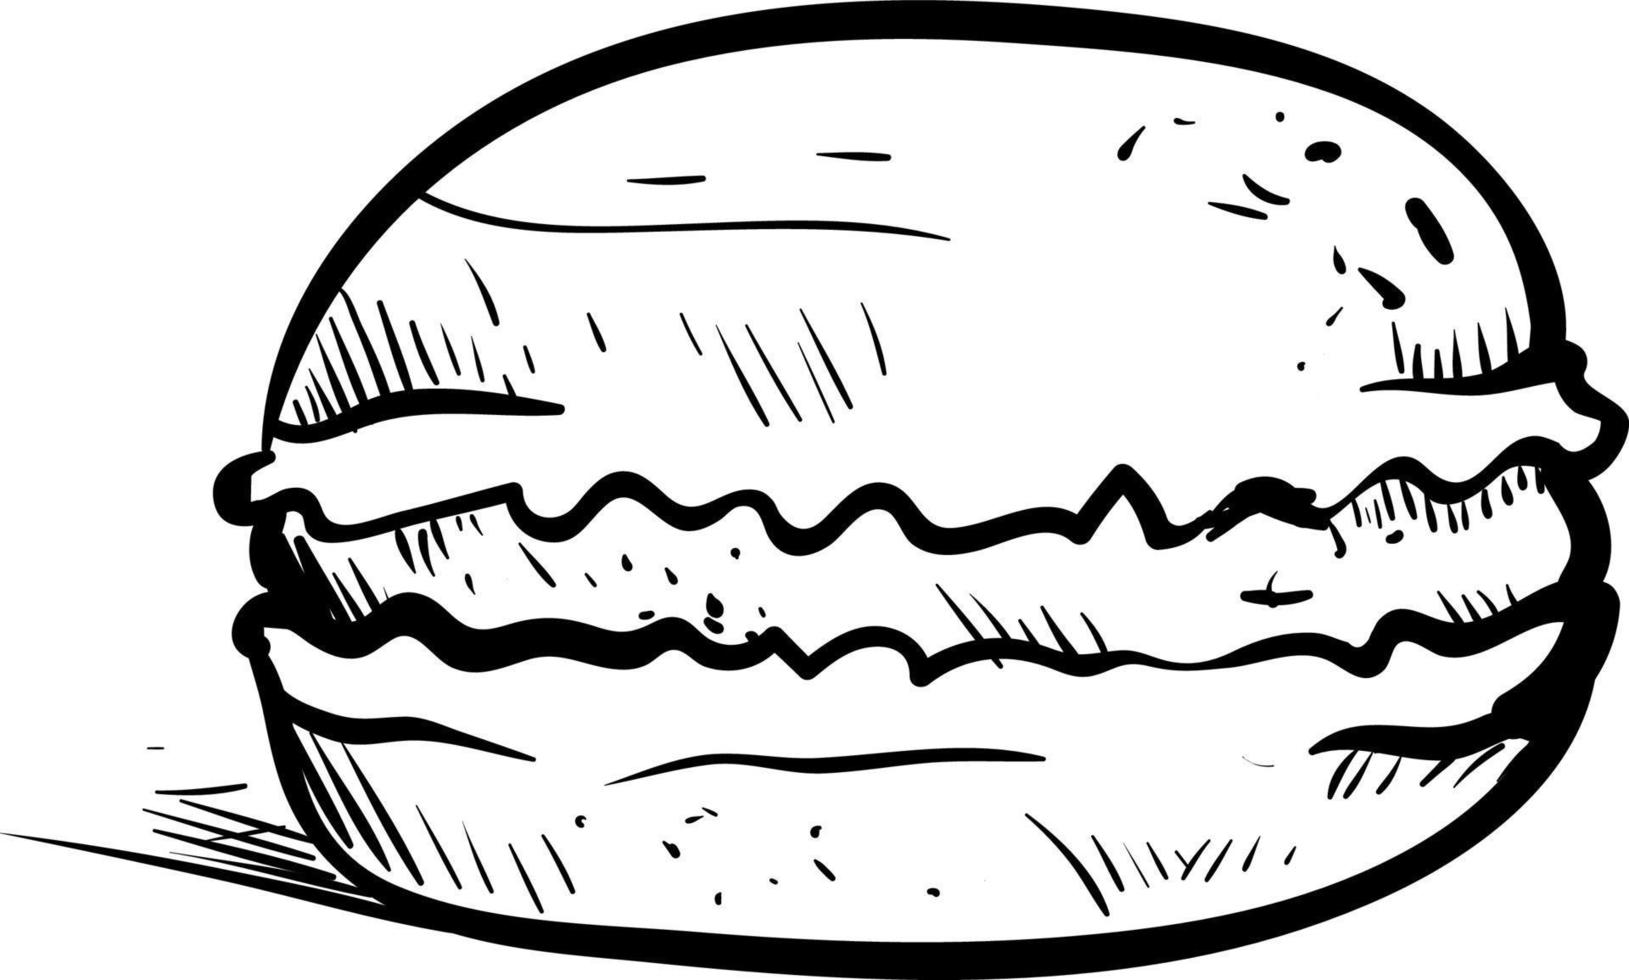 teckning av macaron, illustration, vektor på vit bakgrund.